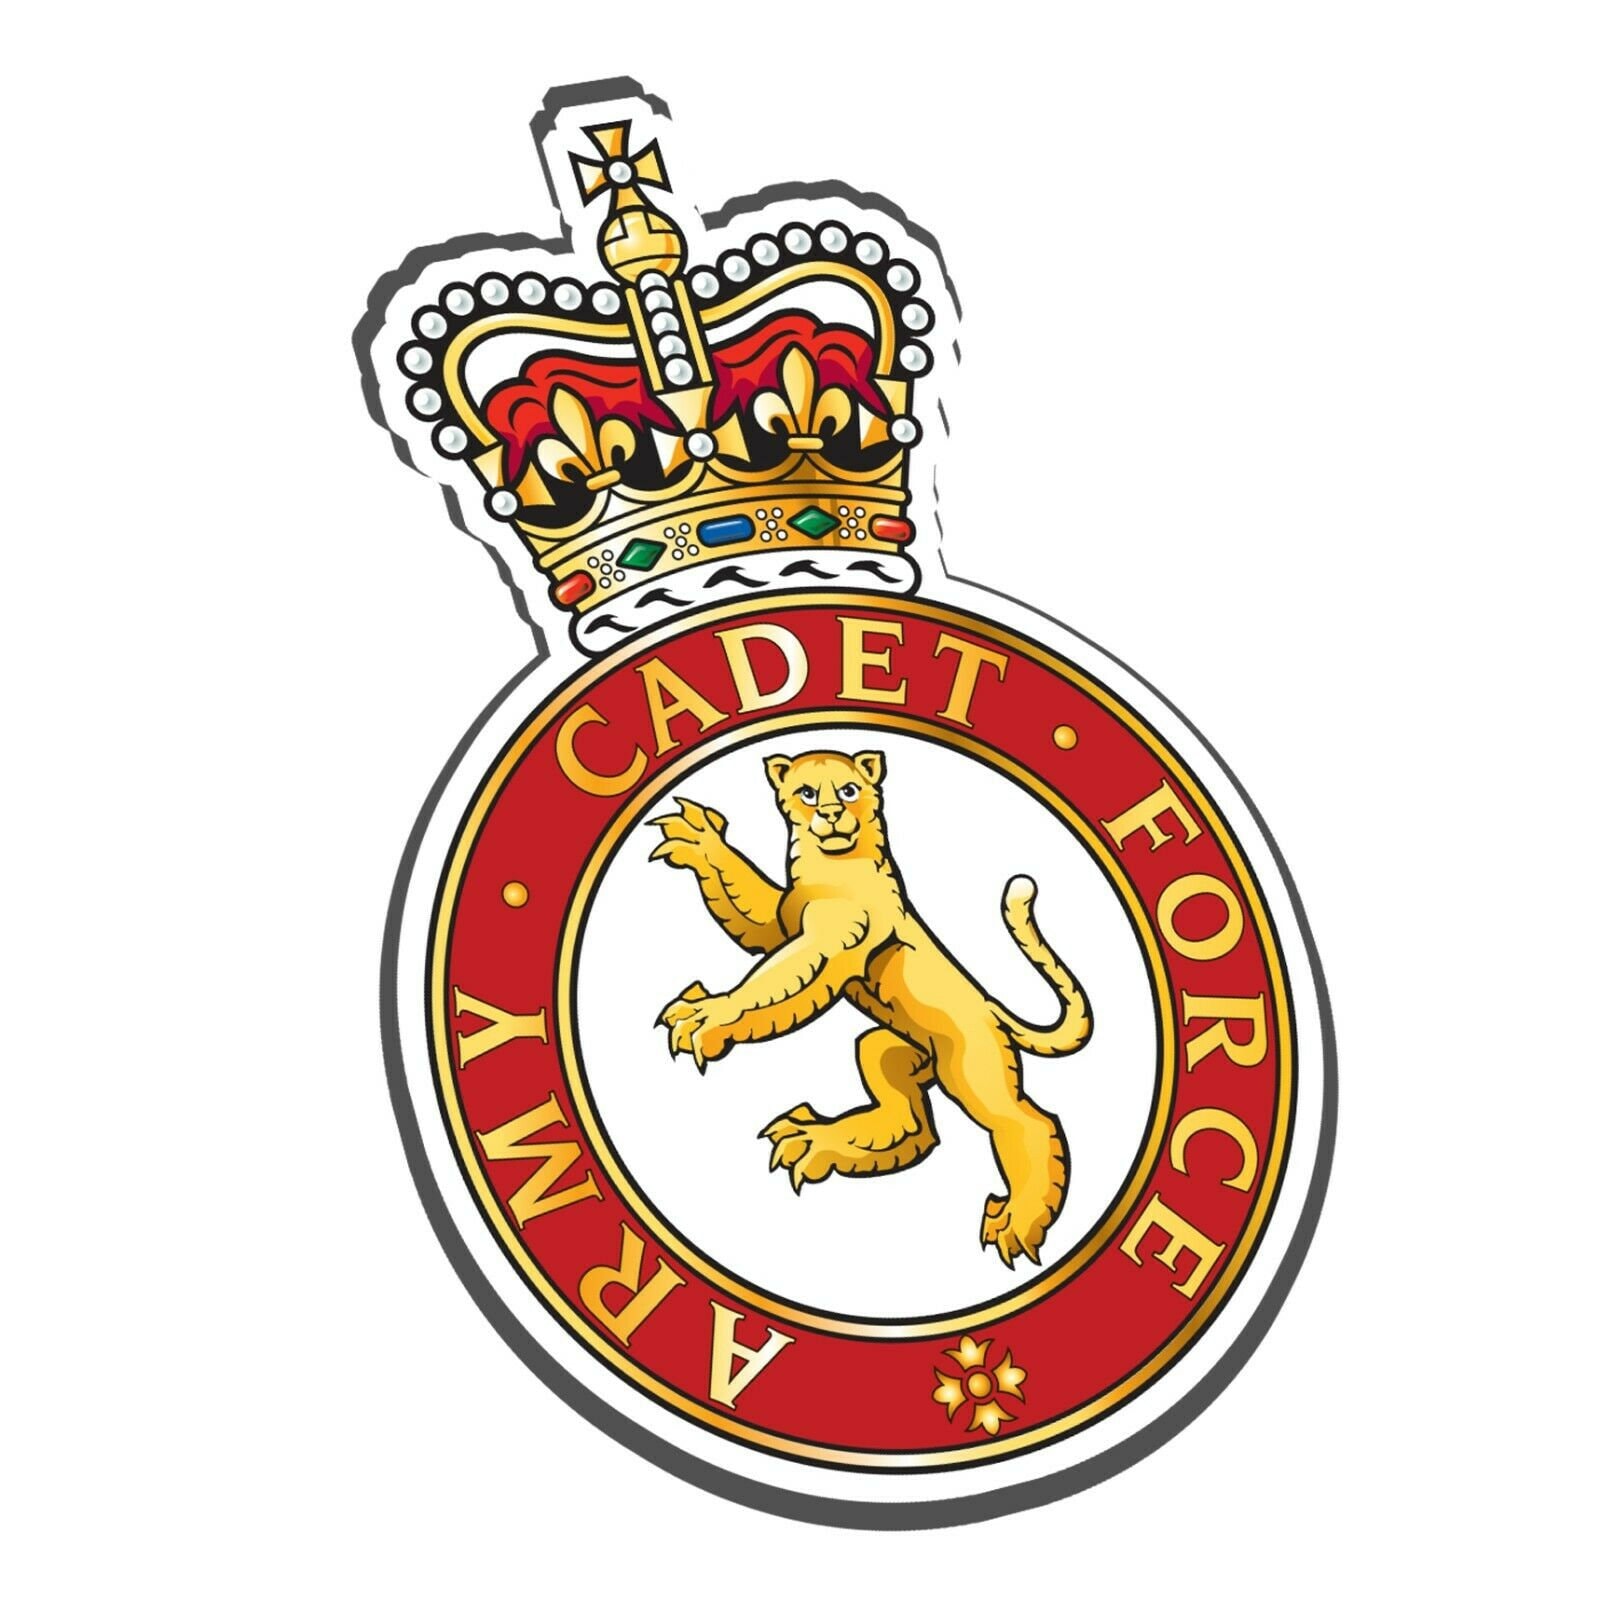 La Royal Dragoon Guardie-distintivo del Reggimento Adesivo-Auto Adesivo 